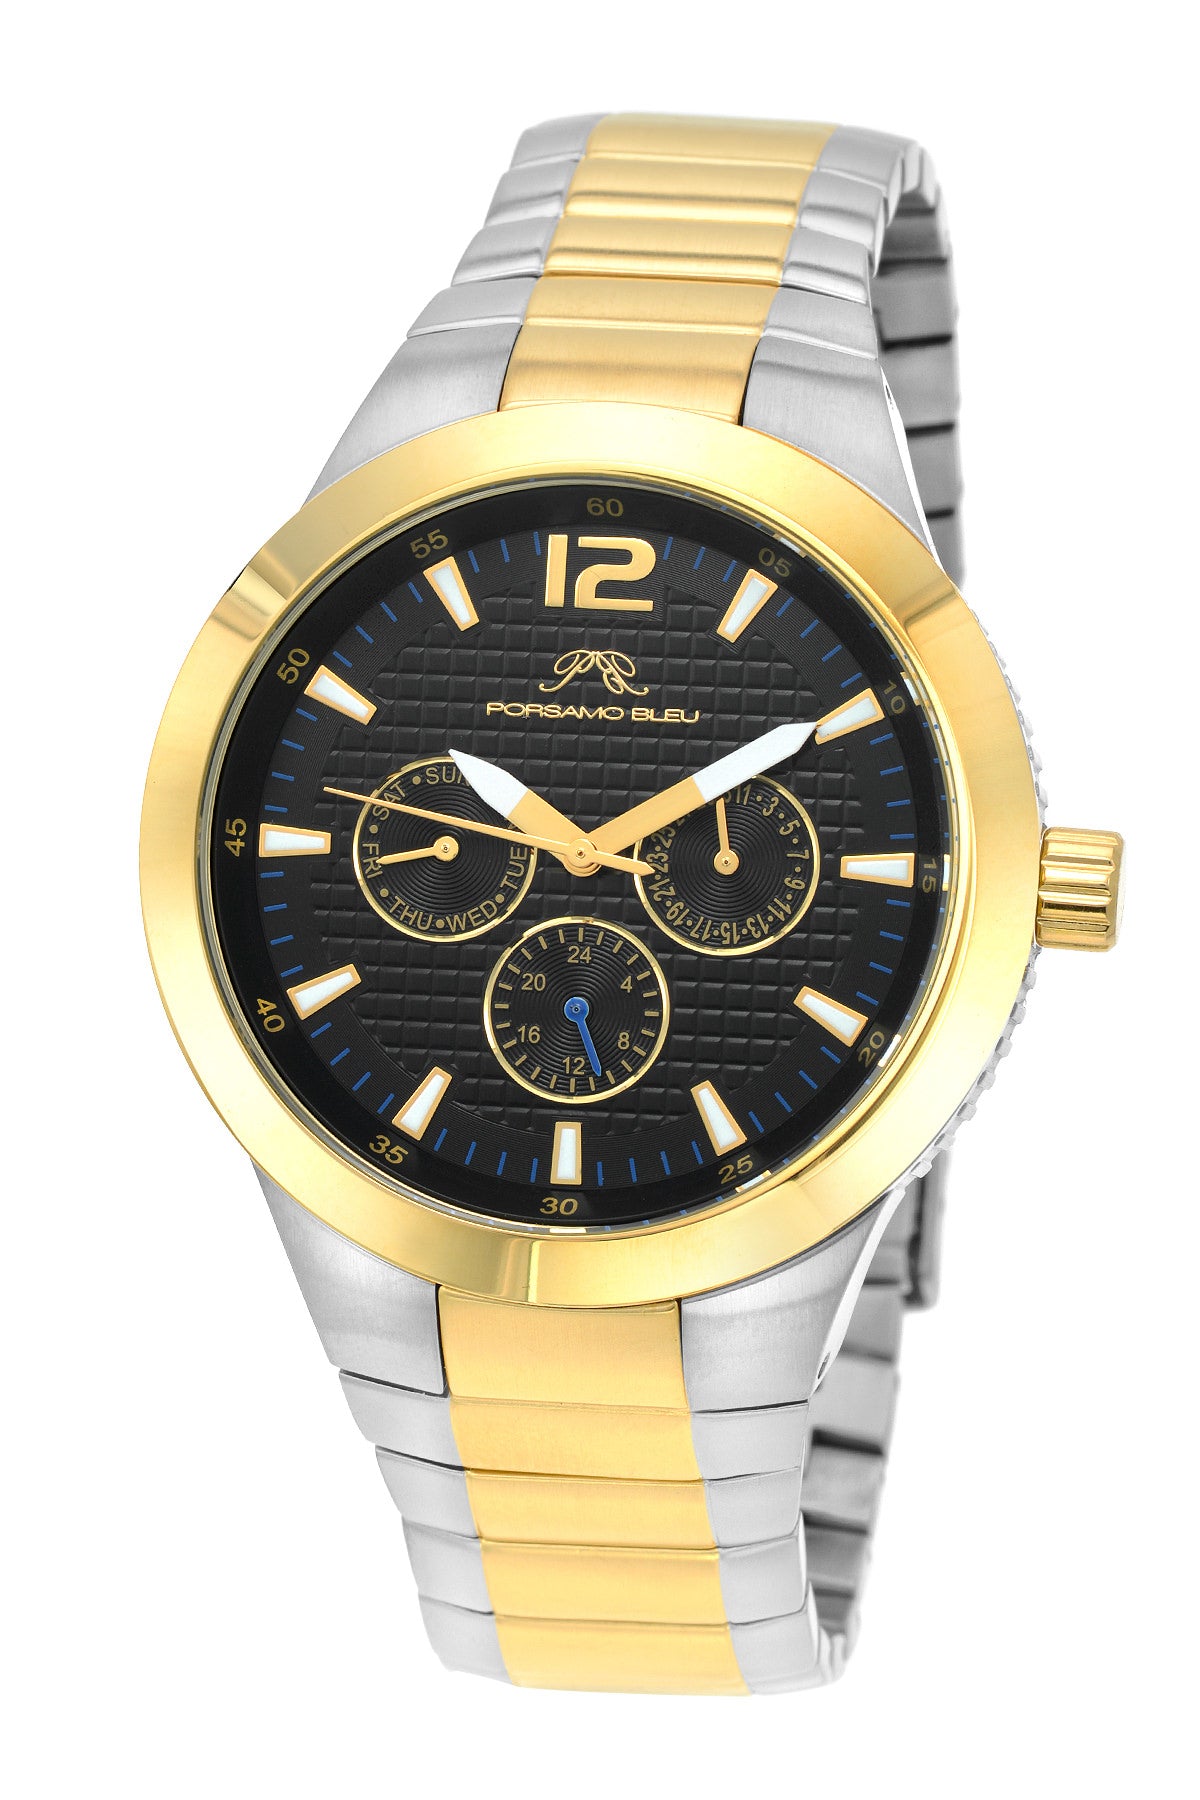 Porsamo Bleu Luca luxury men's stainless steel watch, gold, silver, black 531DLUS